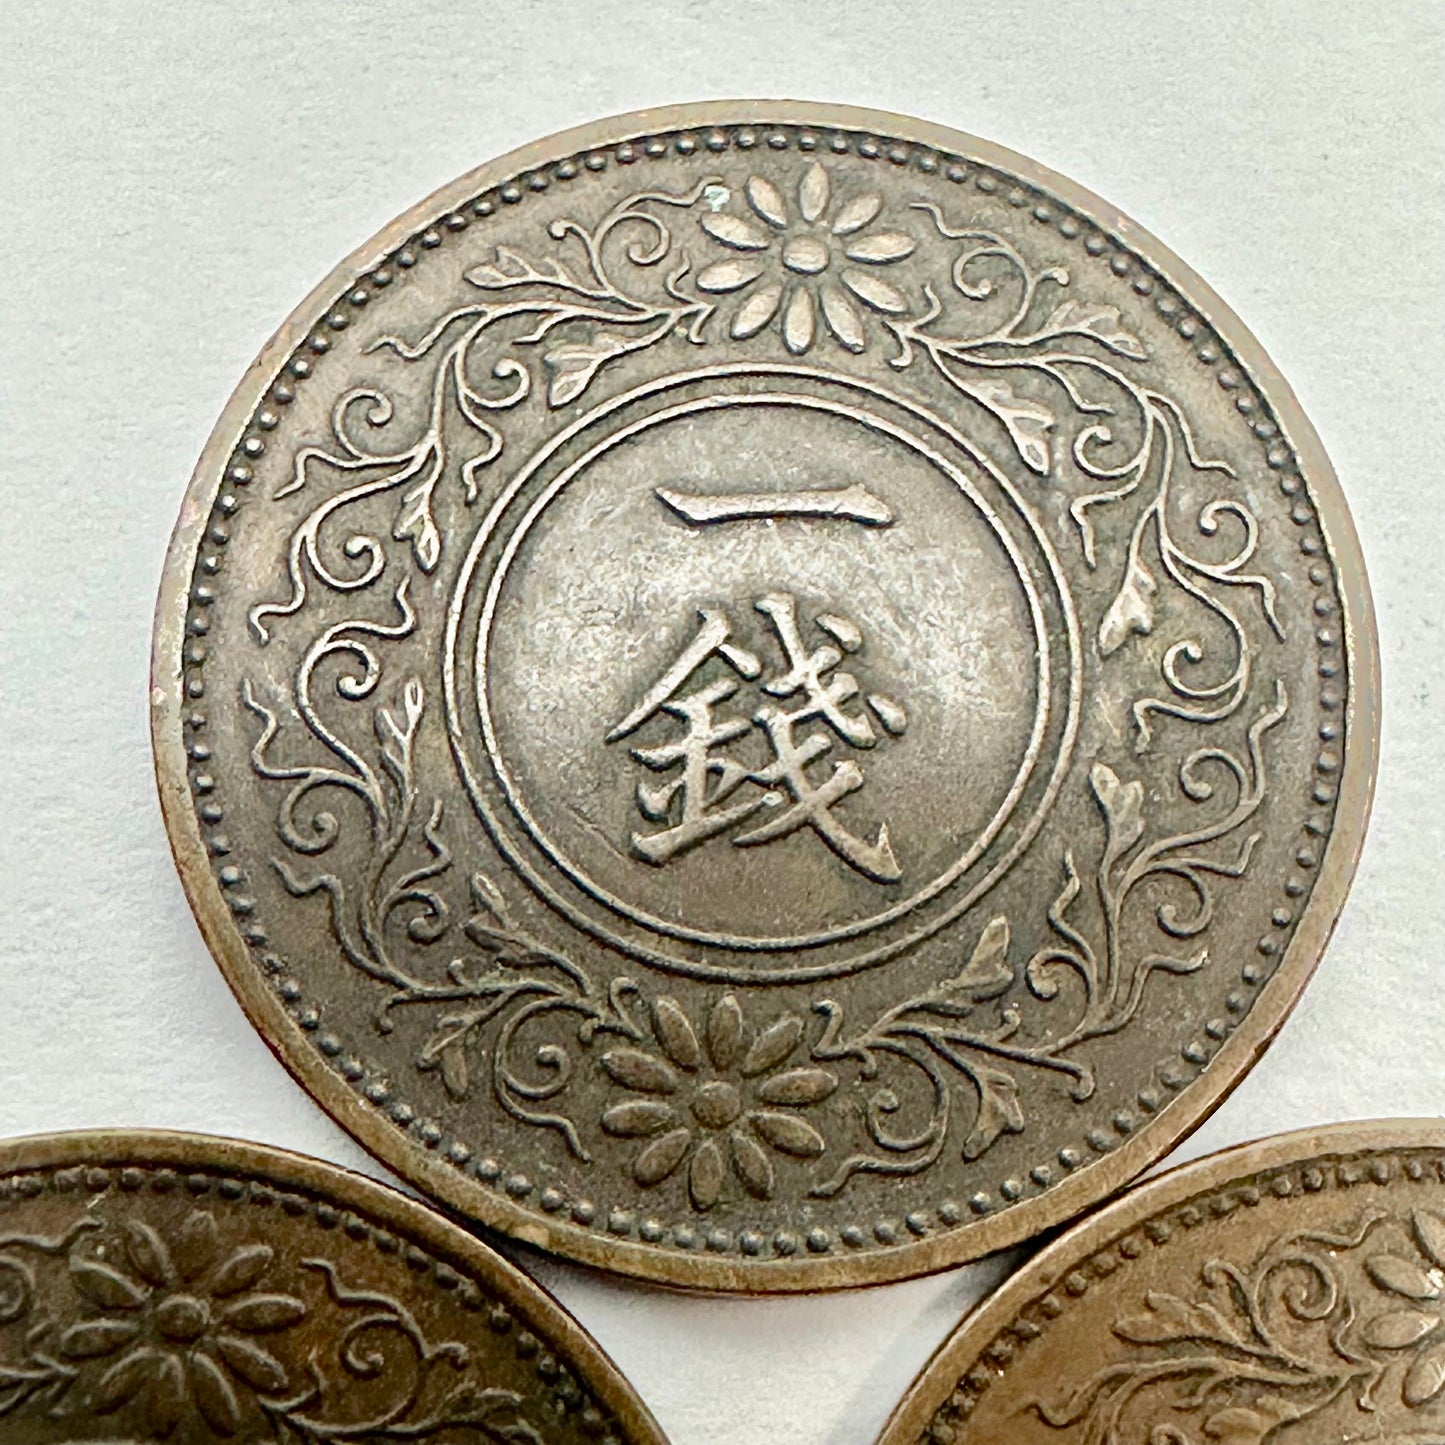 Japanese Bronze 1 Sen Coins 1922/23/24 Set 3 Paulownia Crest Taisho 11 12 13